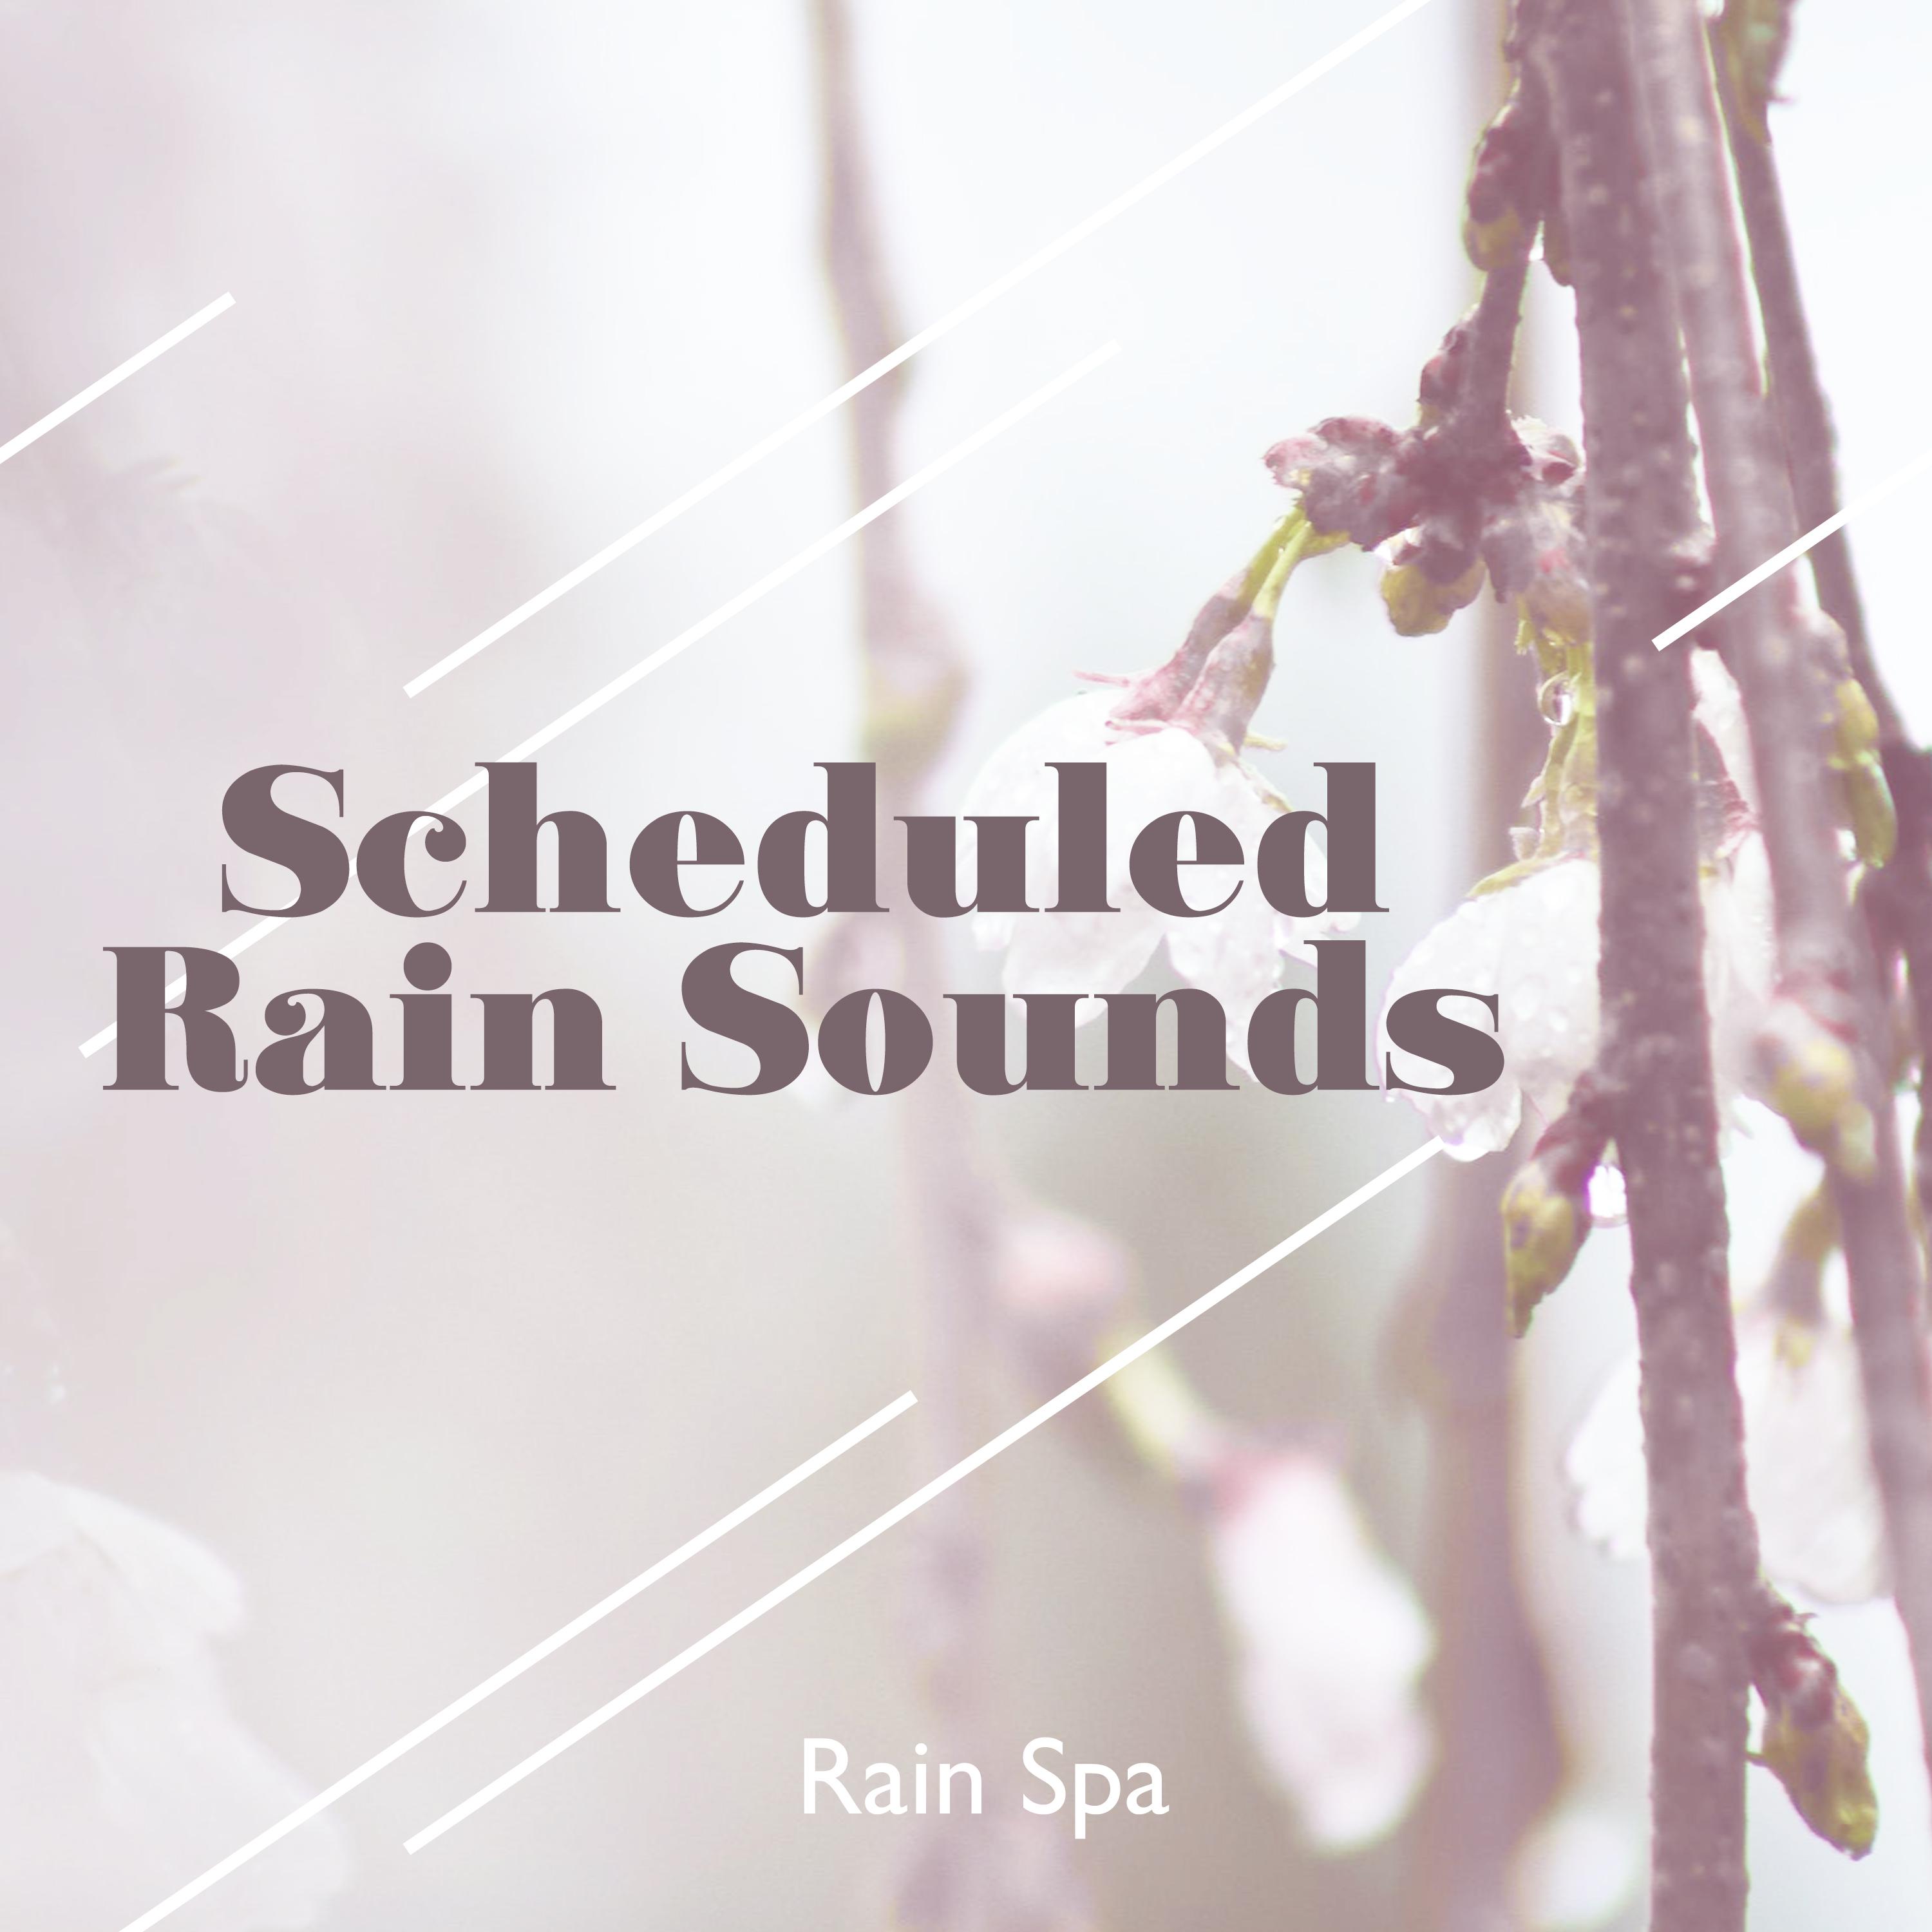 Scheduled Rain Sounds